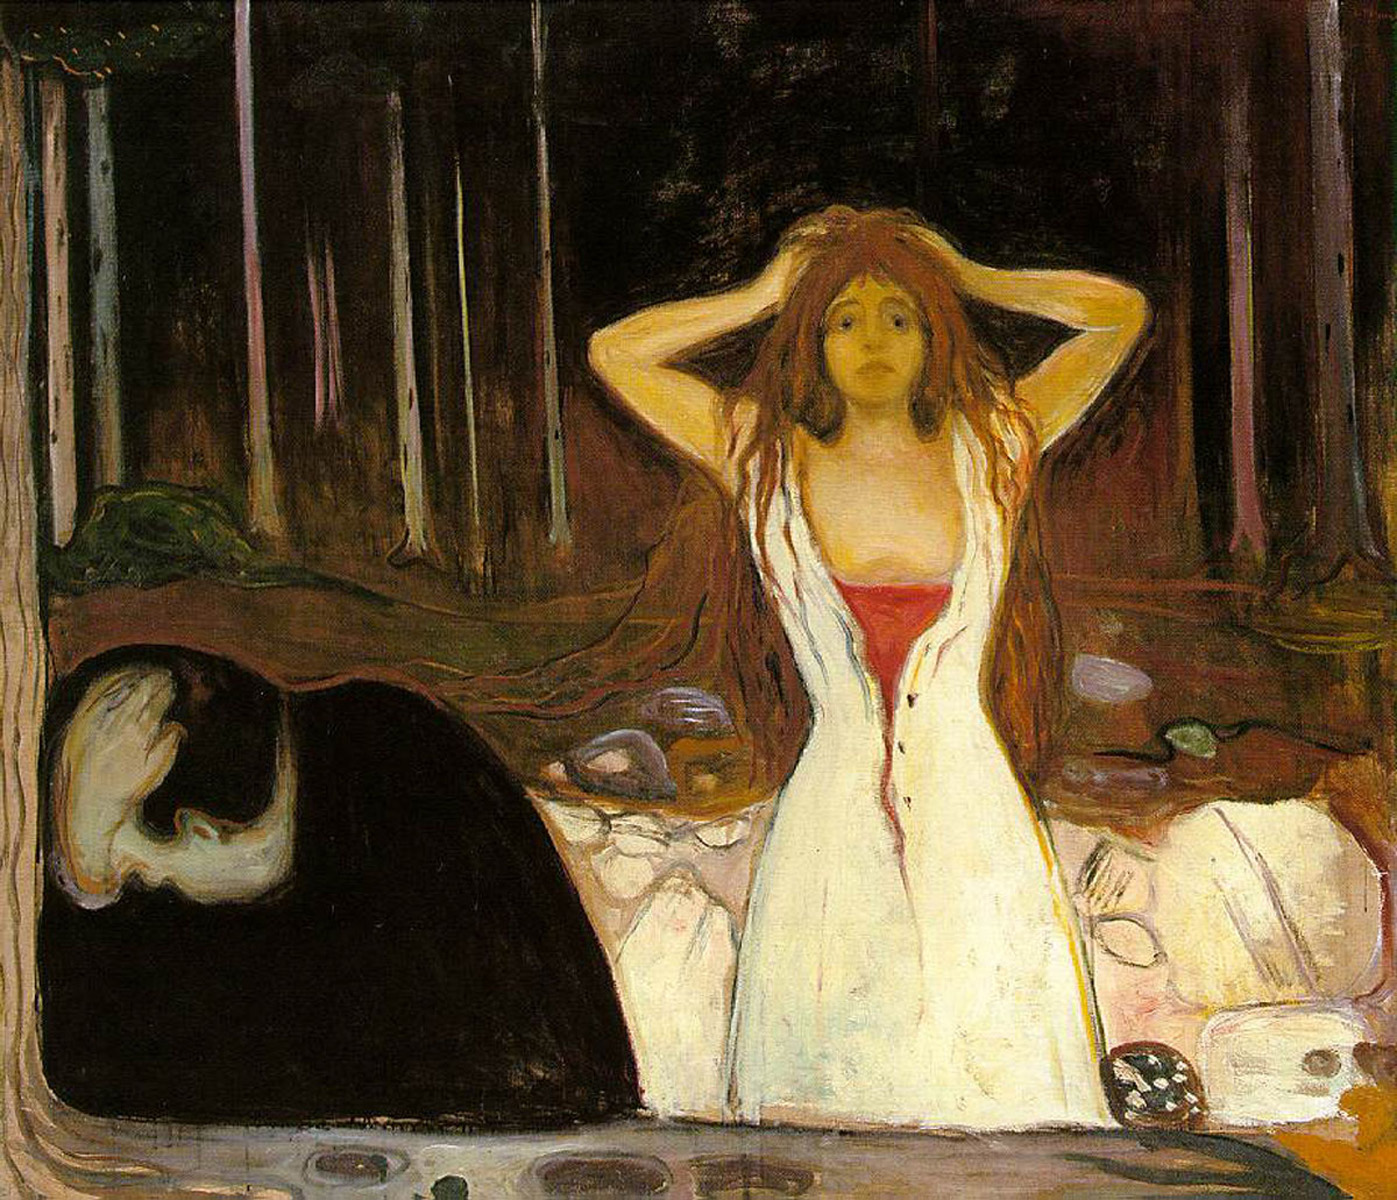 Cenizas by Edvard Munch - 1895 Nasjonalmuseet